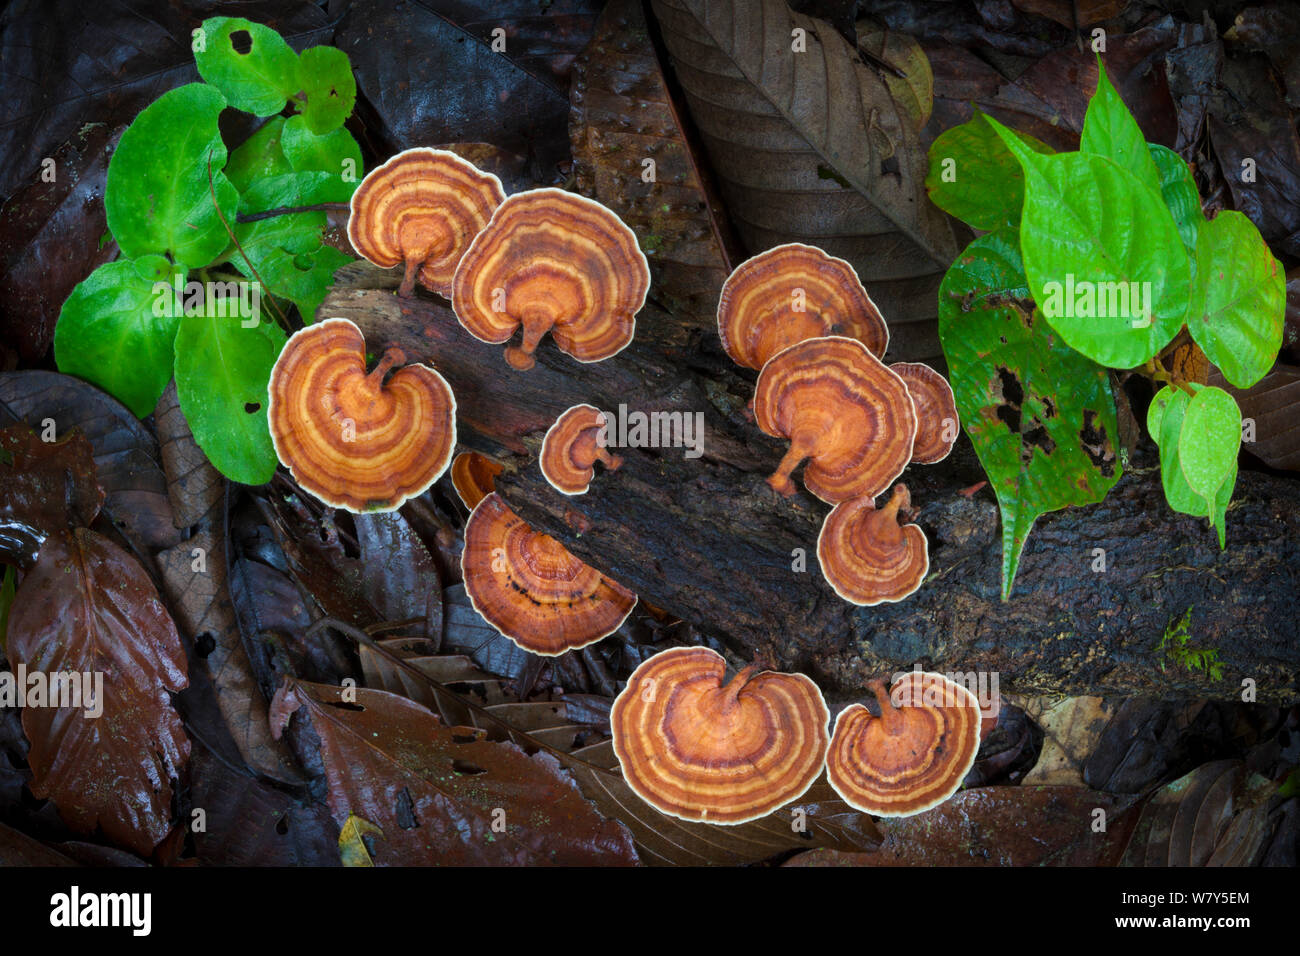 Bracket fungus growing on tree stump in tropical rainforest. Danum Valley, Sabah, Borneo. Stock Photo